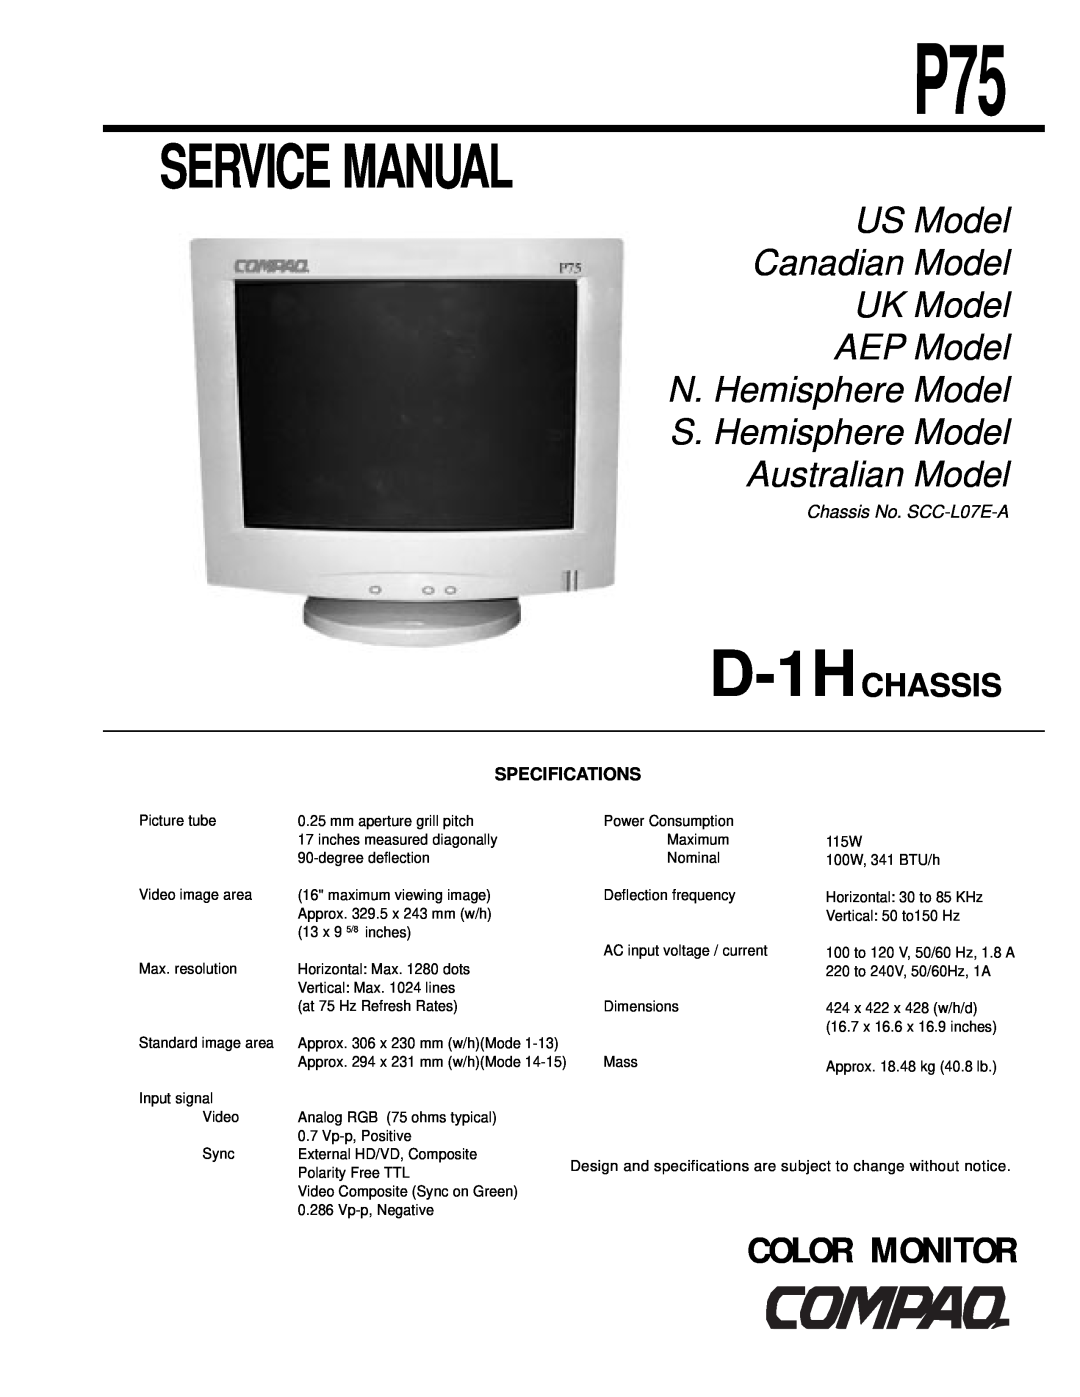 Compaq D-1H specifications Service Manual, US Model Canadian Model UK Model AEP Model N. Hemisphere Model, Color Monitor 